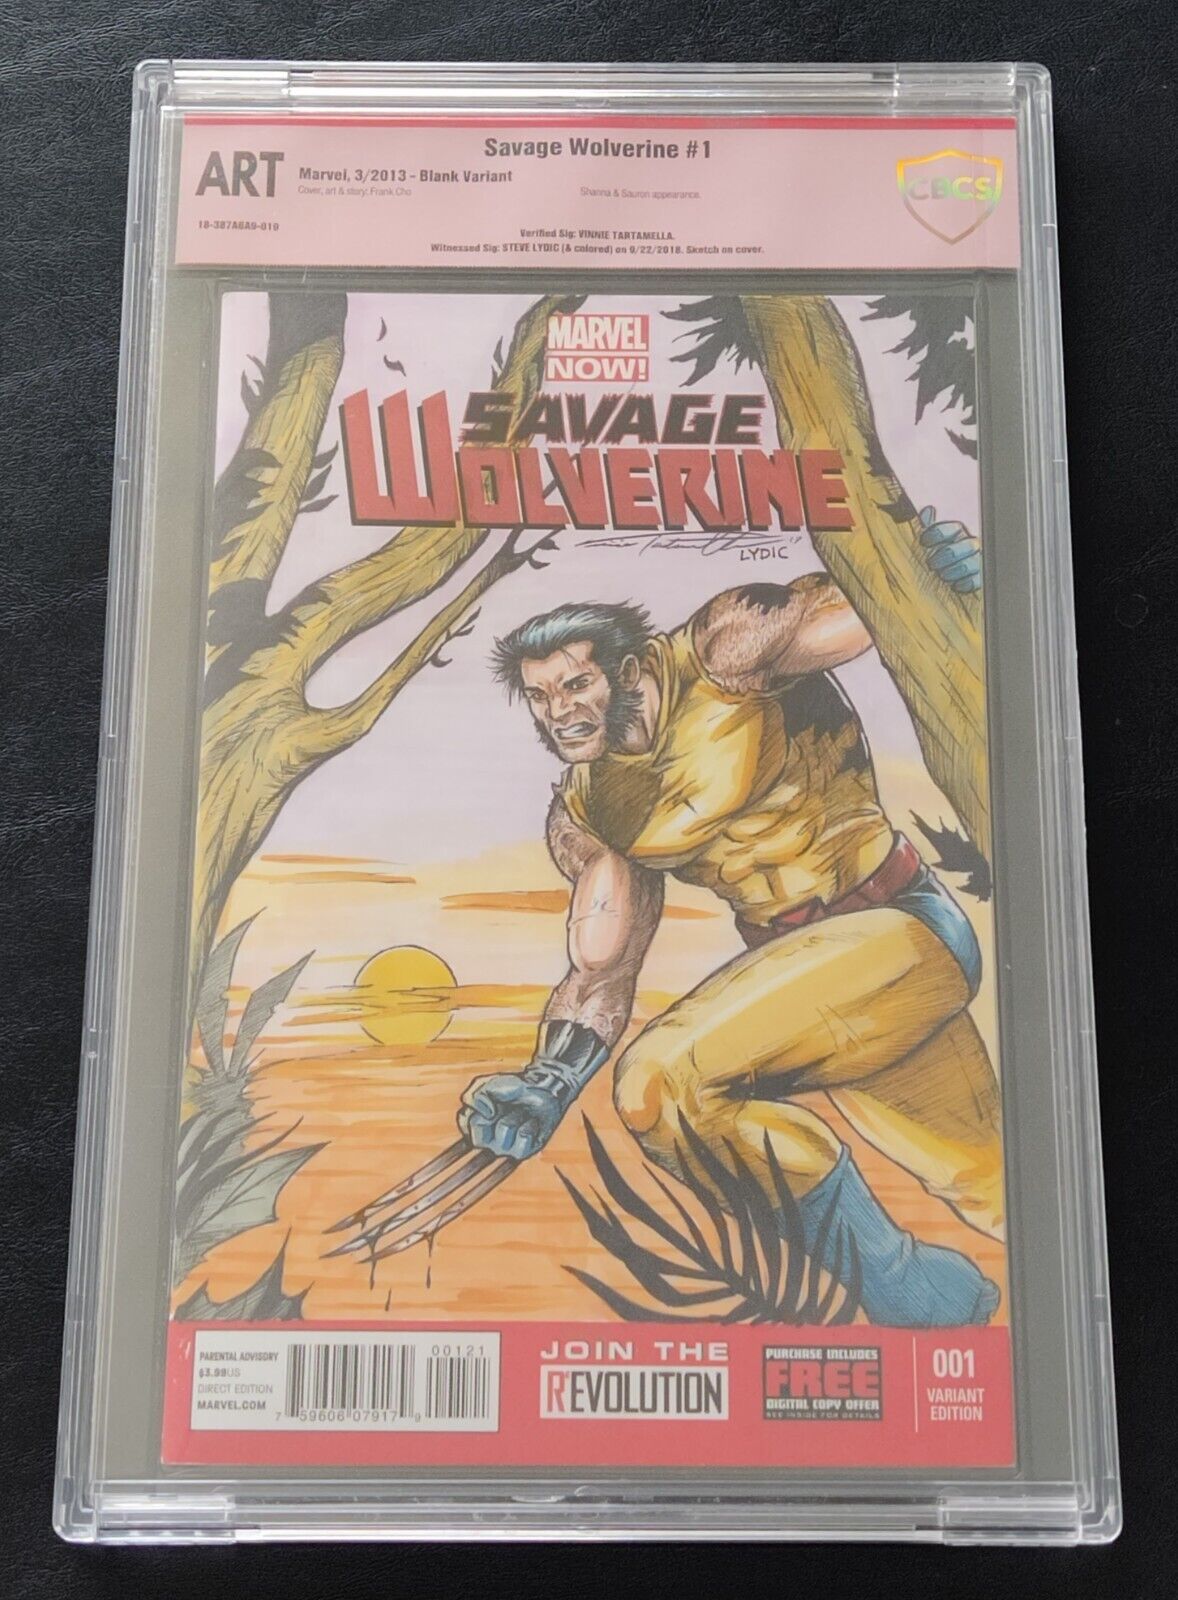 Savage Wolverine # 1 - Sketch Art Blank Variant CBCS Signed by Vinnie Tartamella